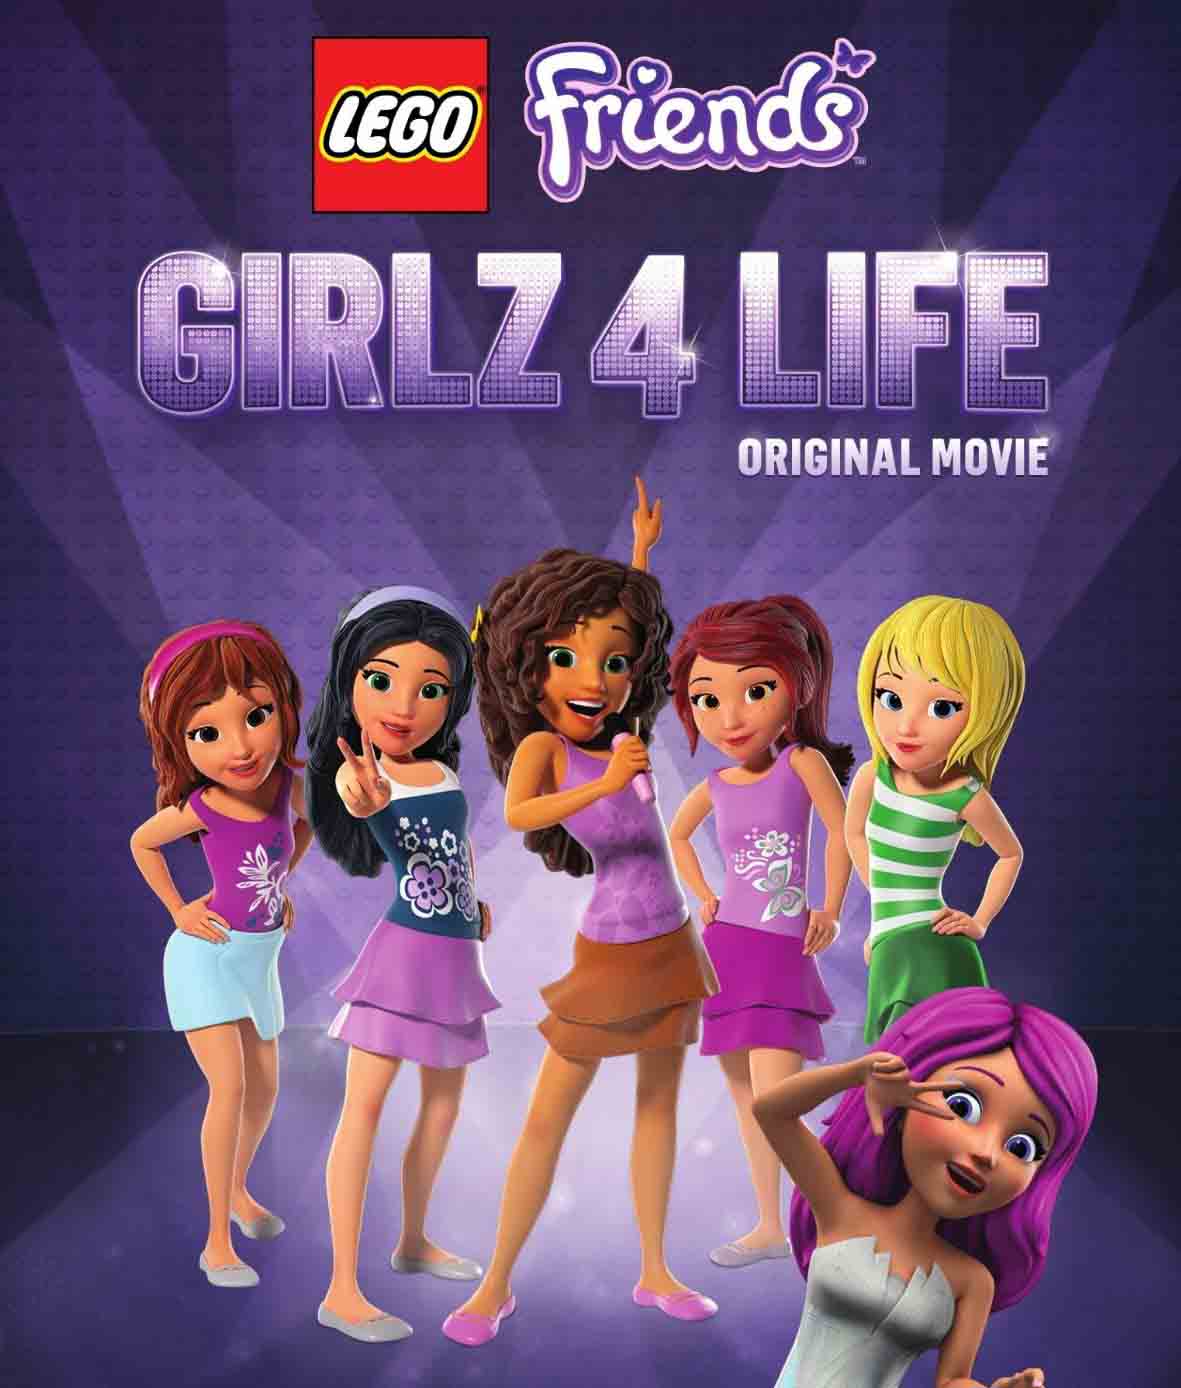 LEGO FRIENDS: Girlz 4 Life